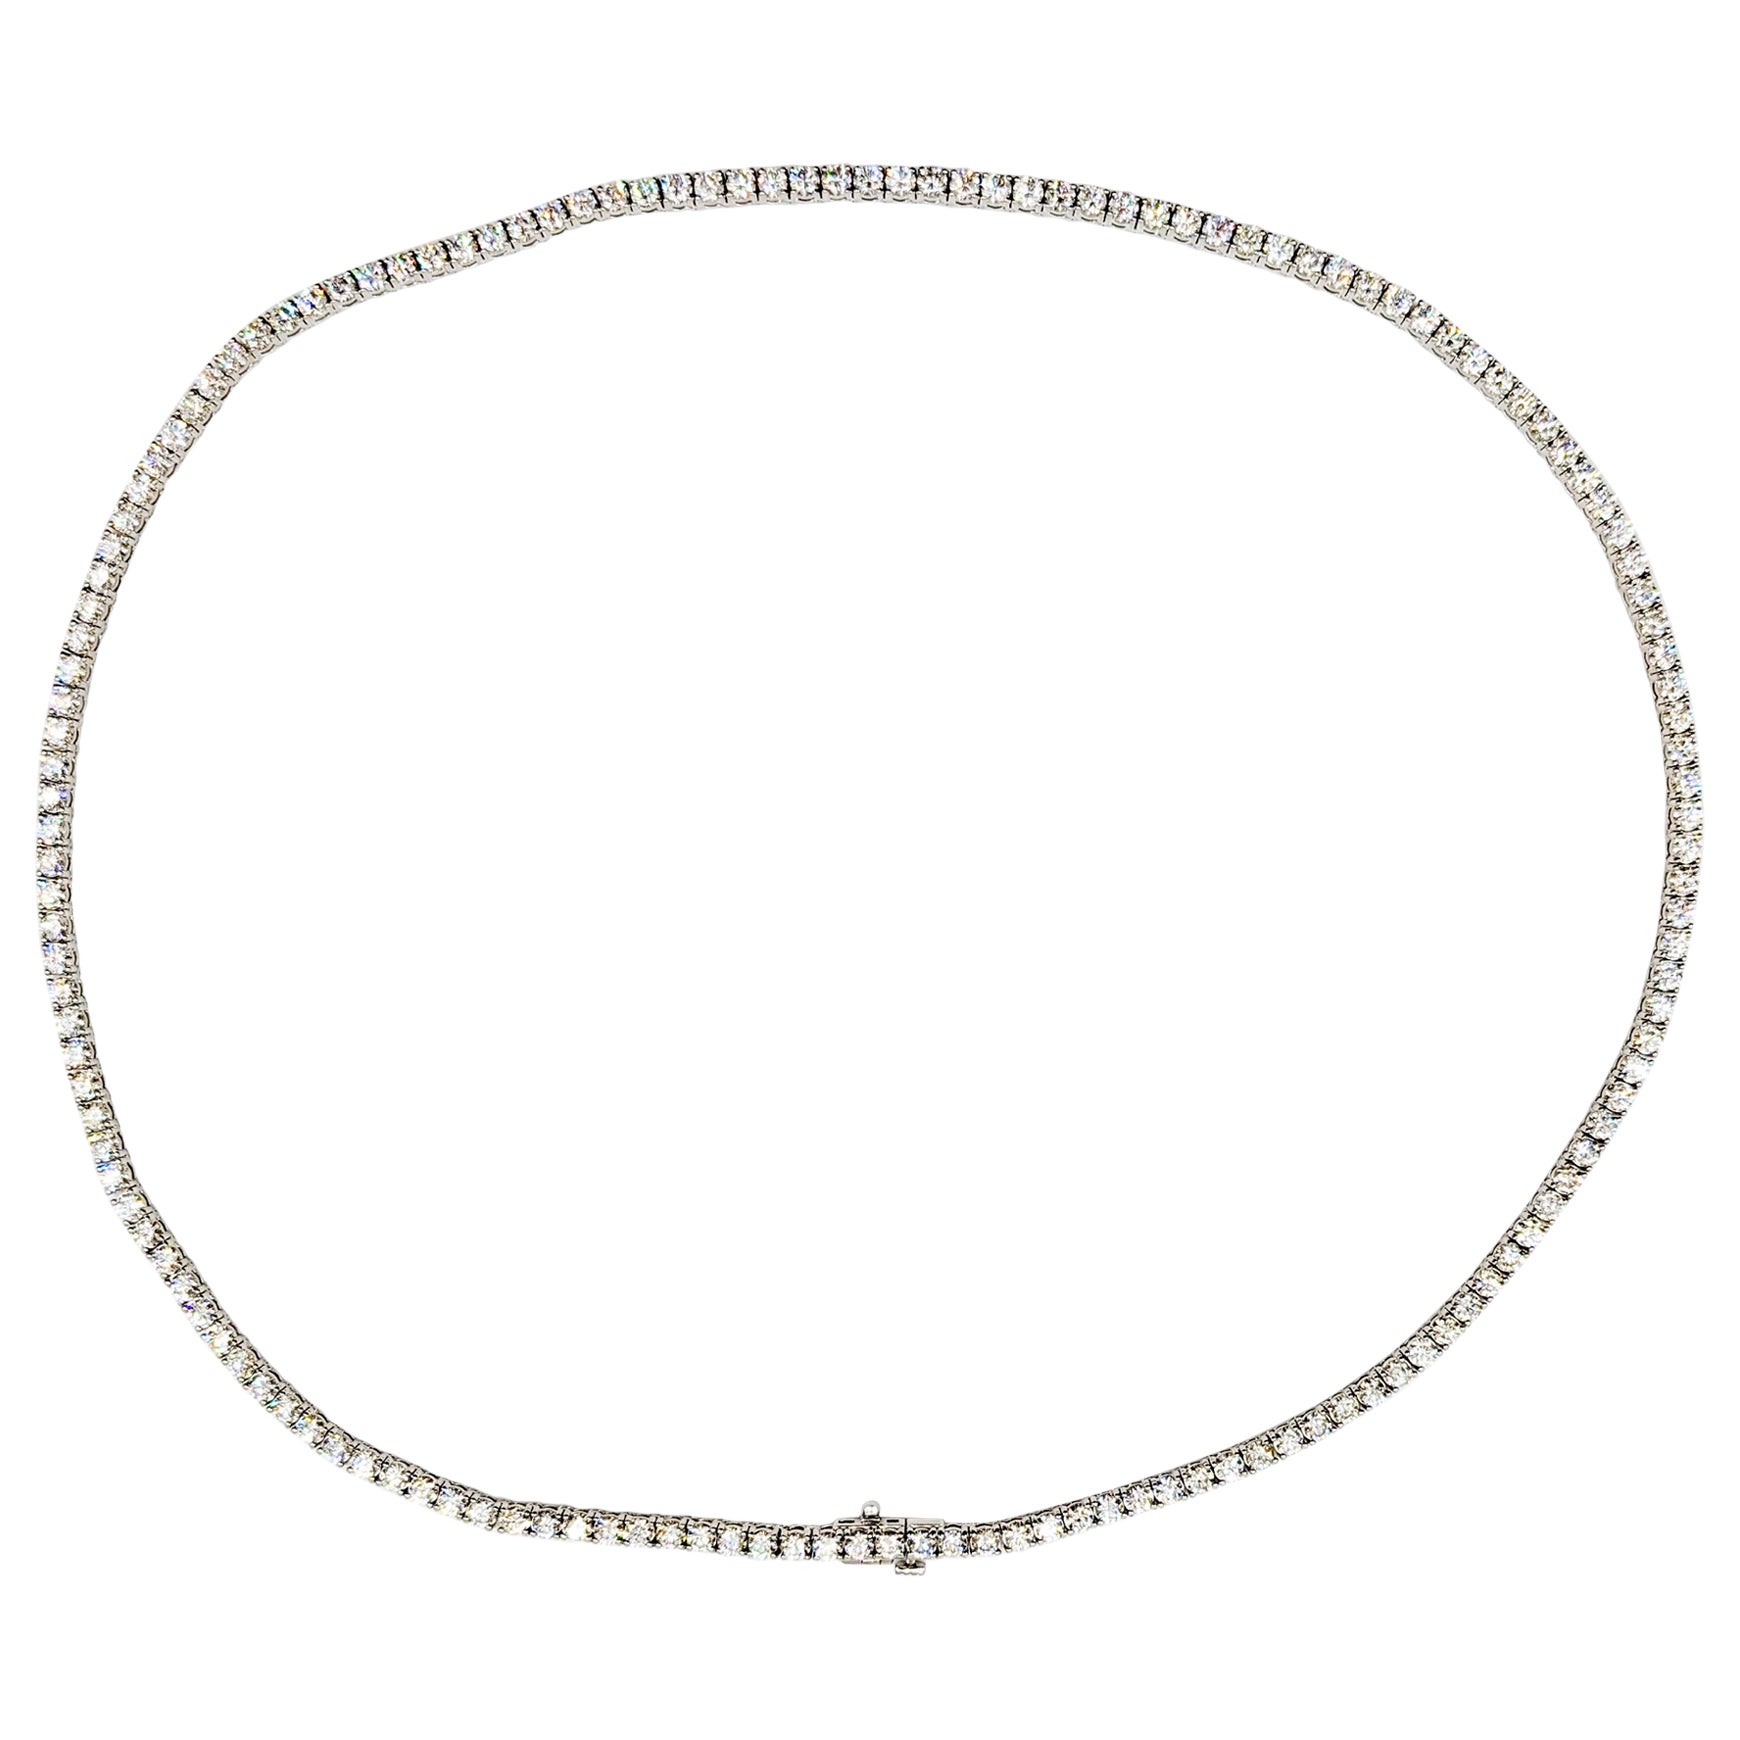 Magnifique collier tennis en or blanc 14 carats avec diamants naturels de 16,88 carats